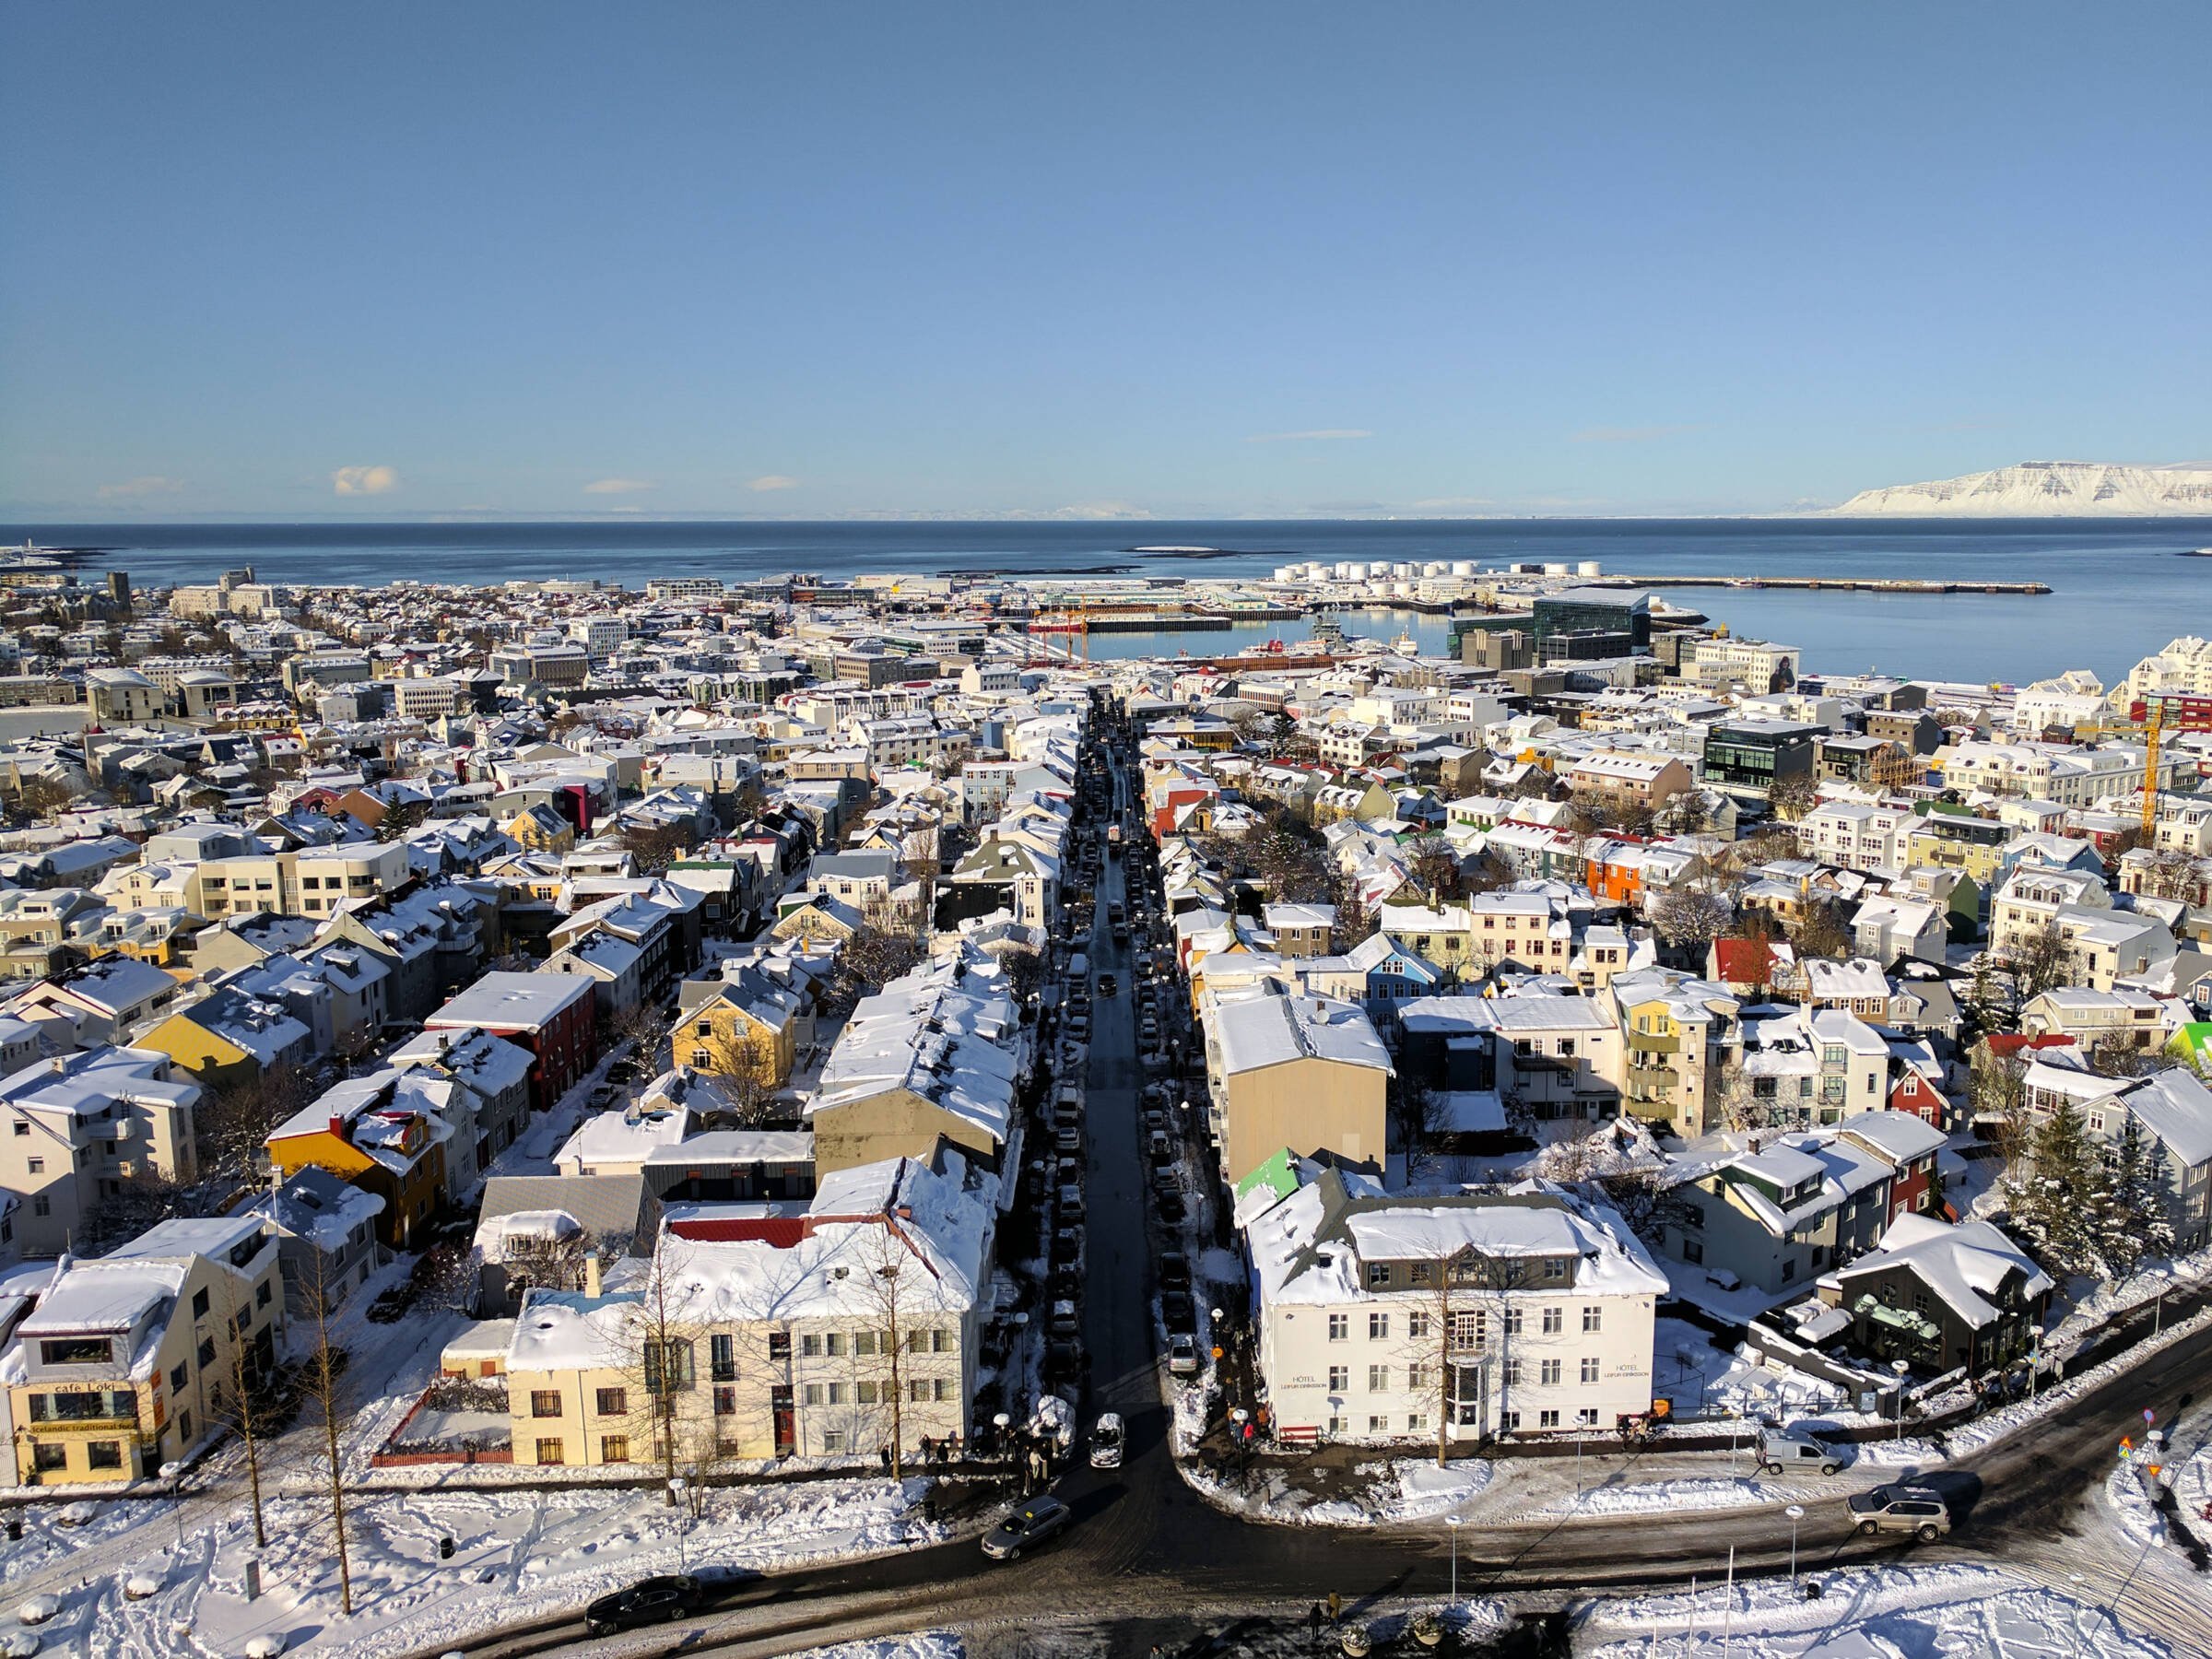 Snowy-Reykjavik-from-above (1).jpg